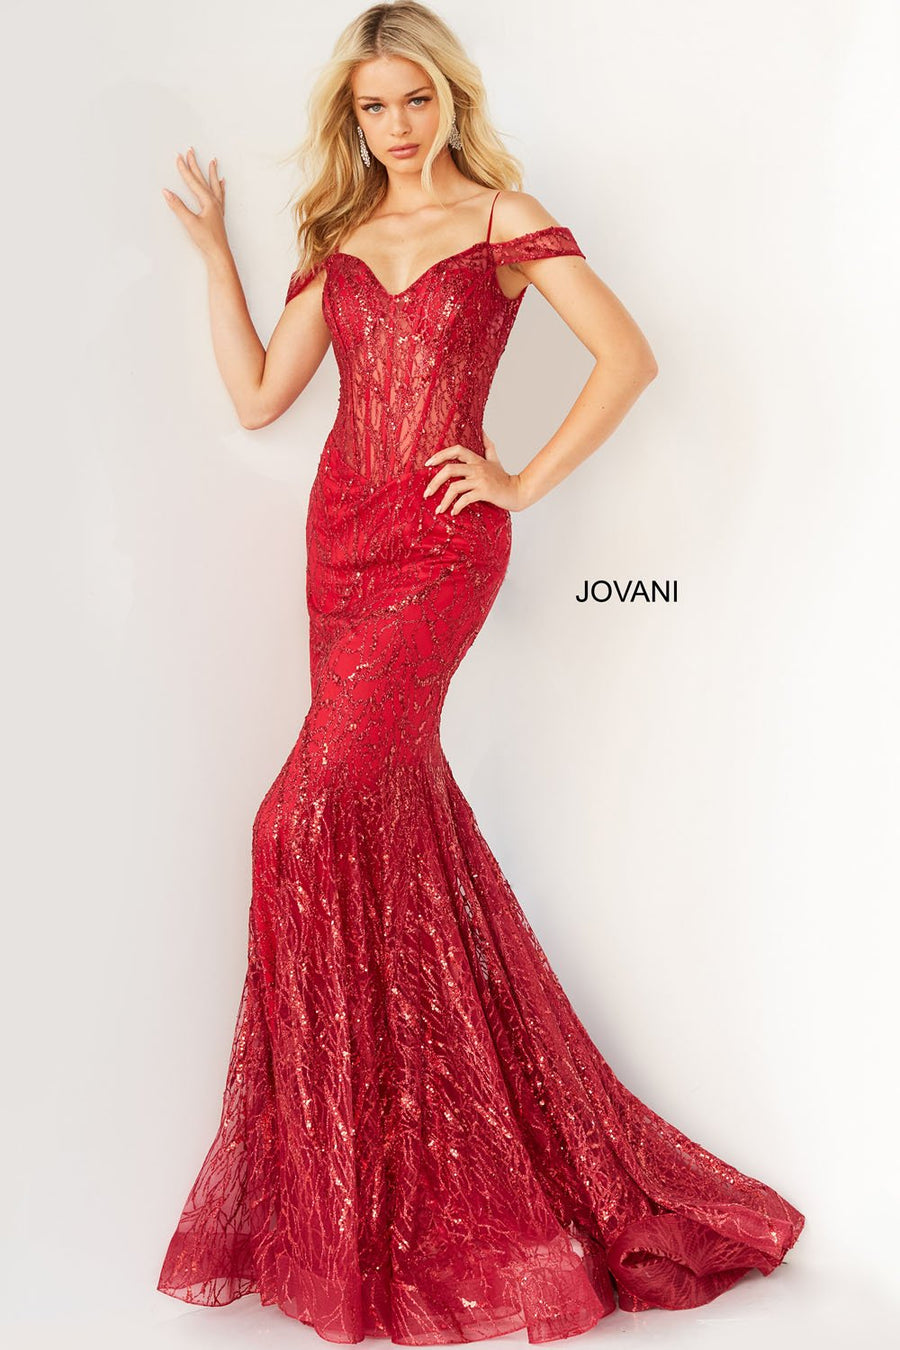 Jovani 05838 Red prom dresses images.